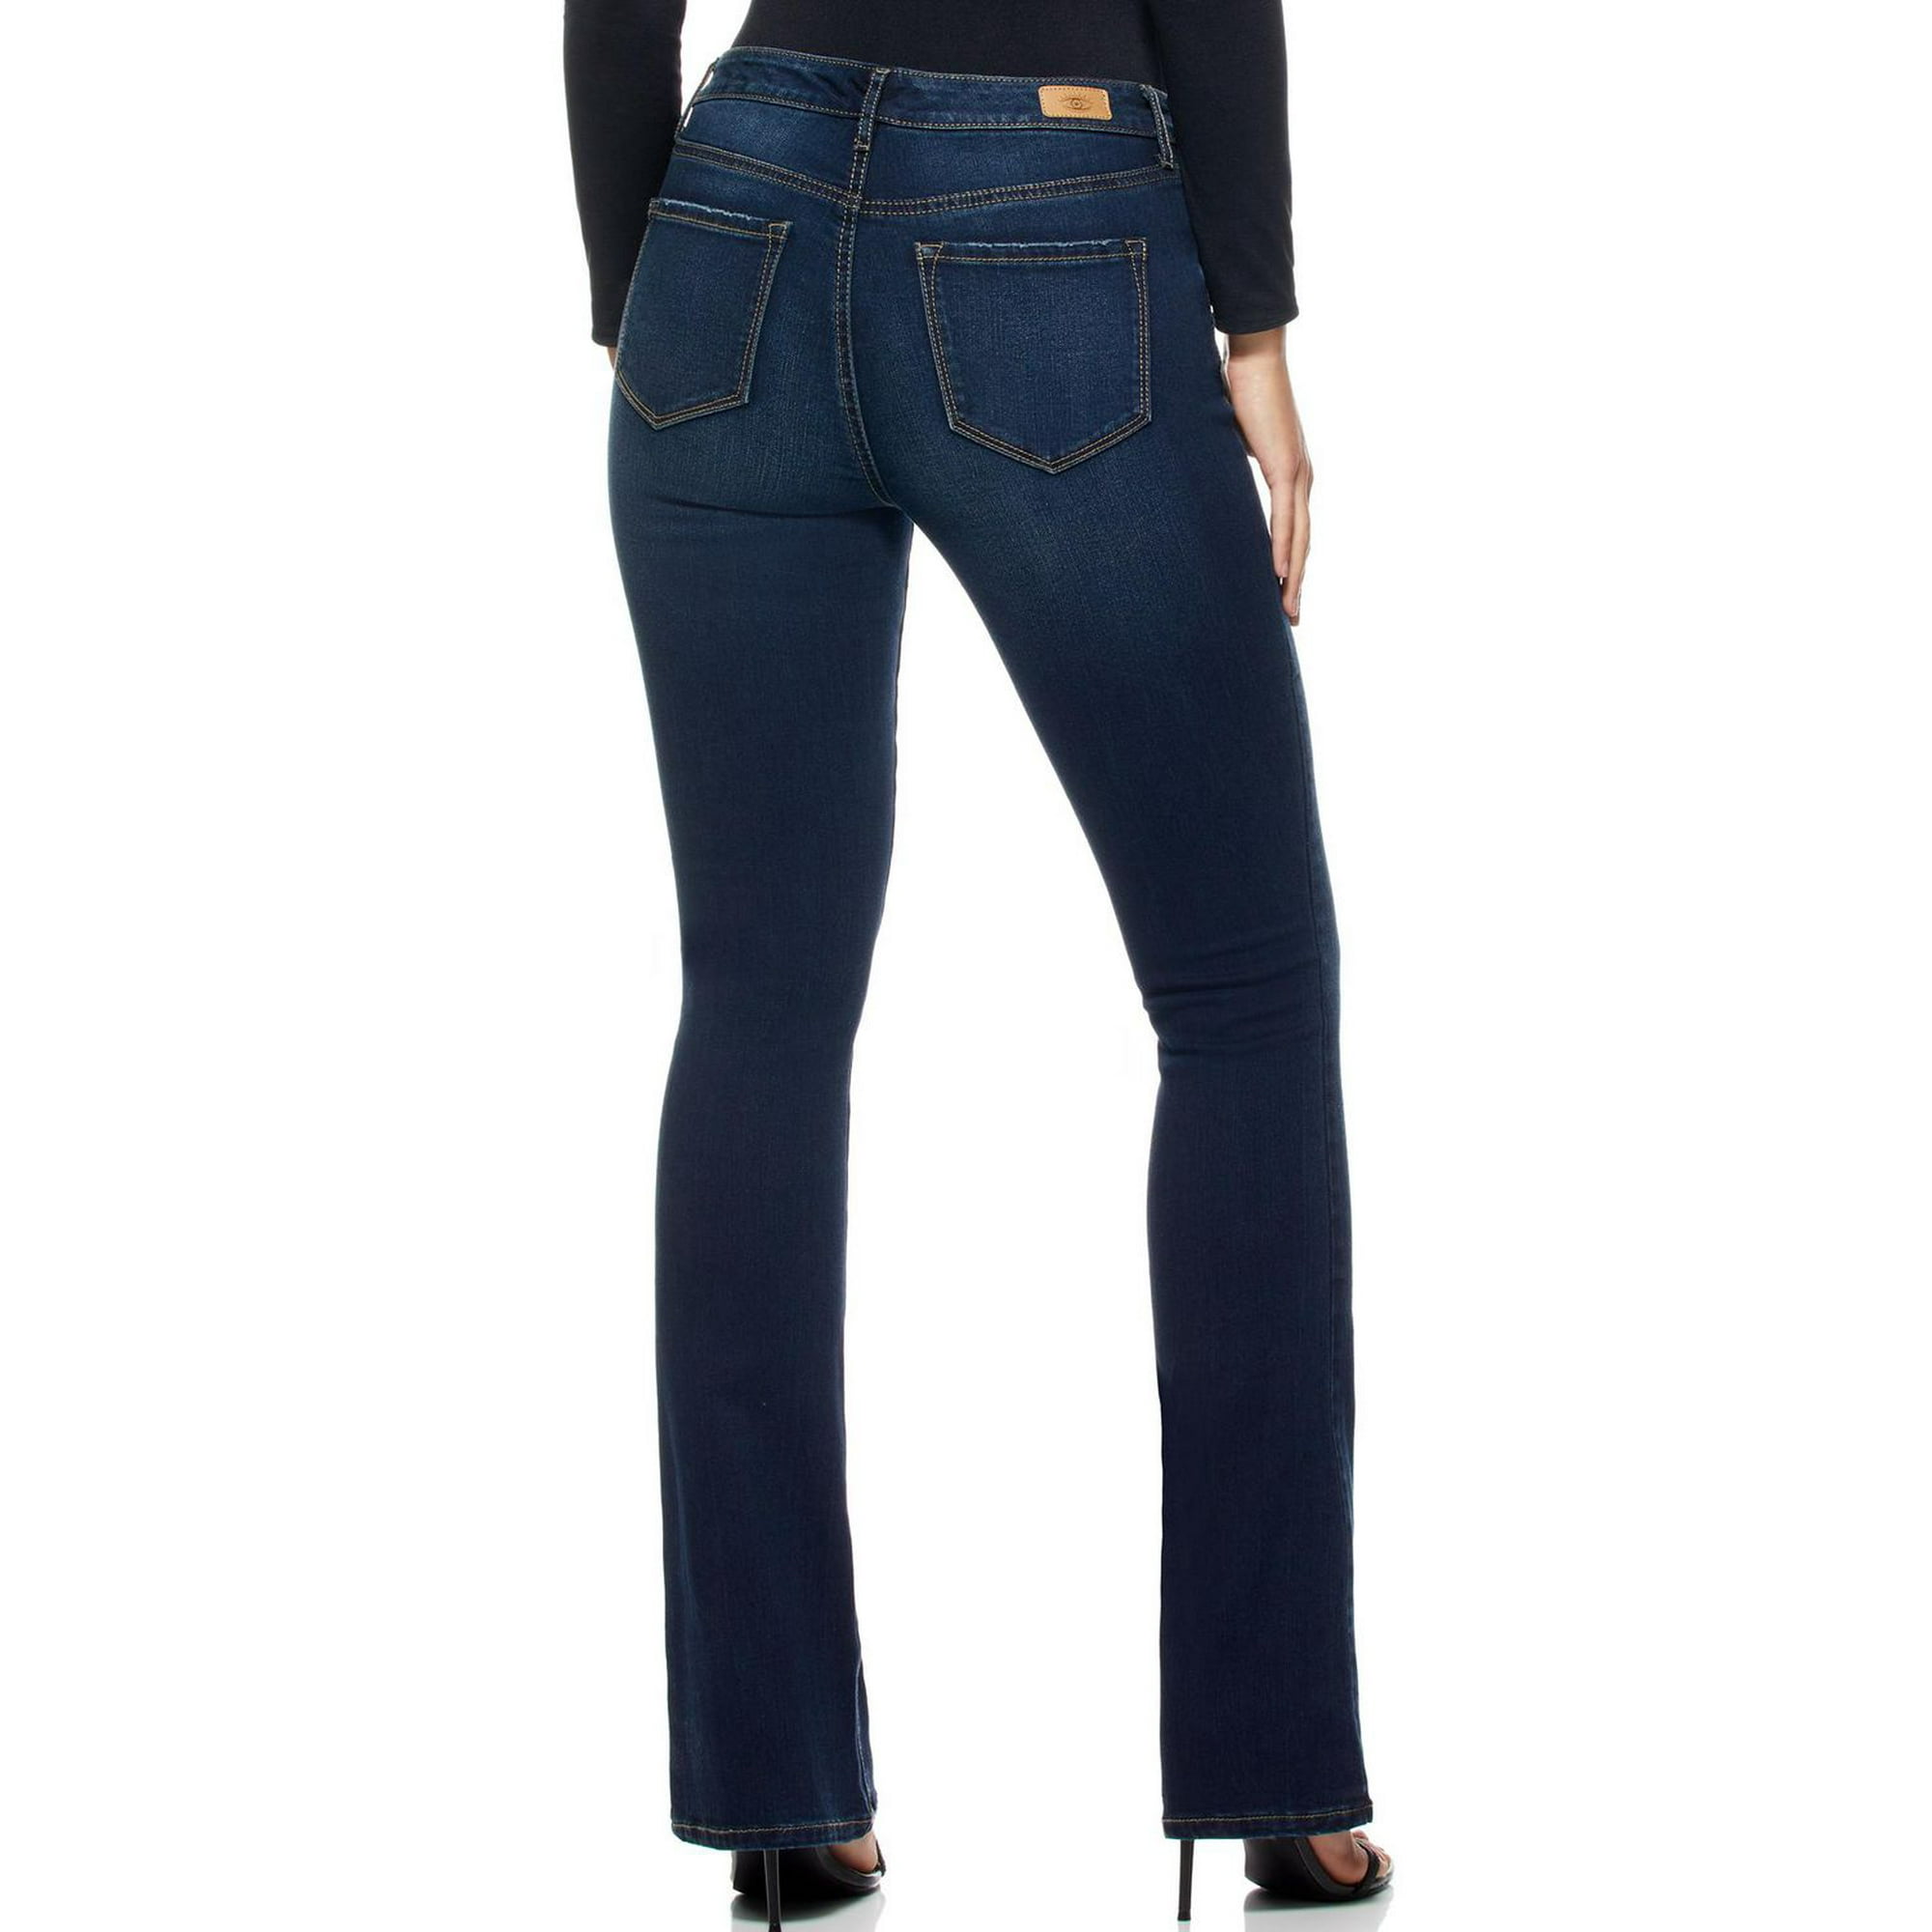 Sofia Vergara's Sofia Jeans black cold-shoulder top and pintuck jeans